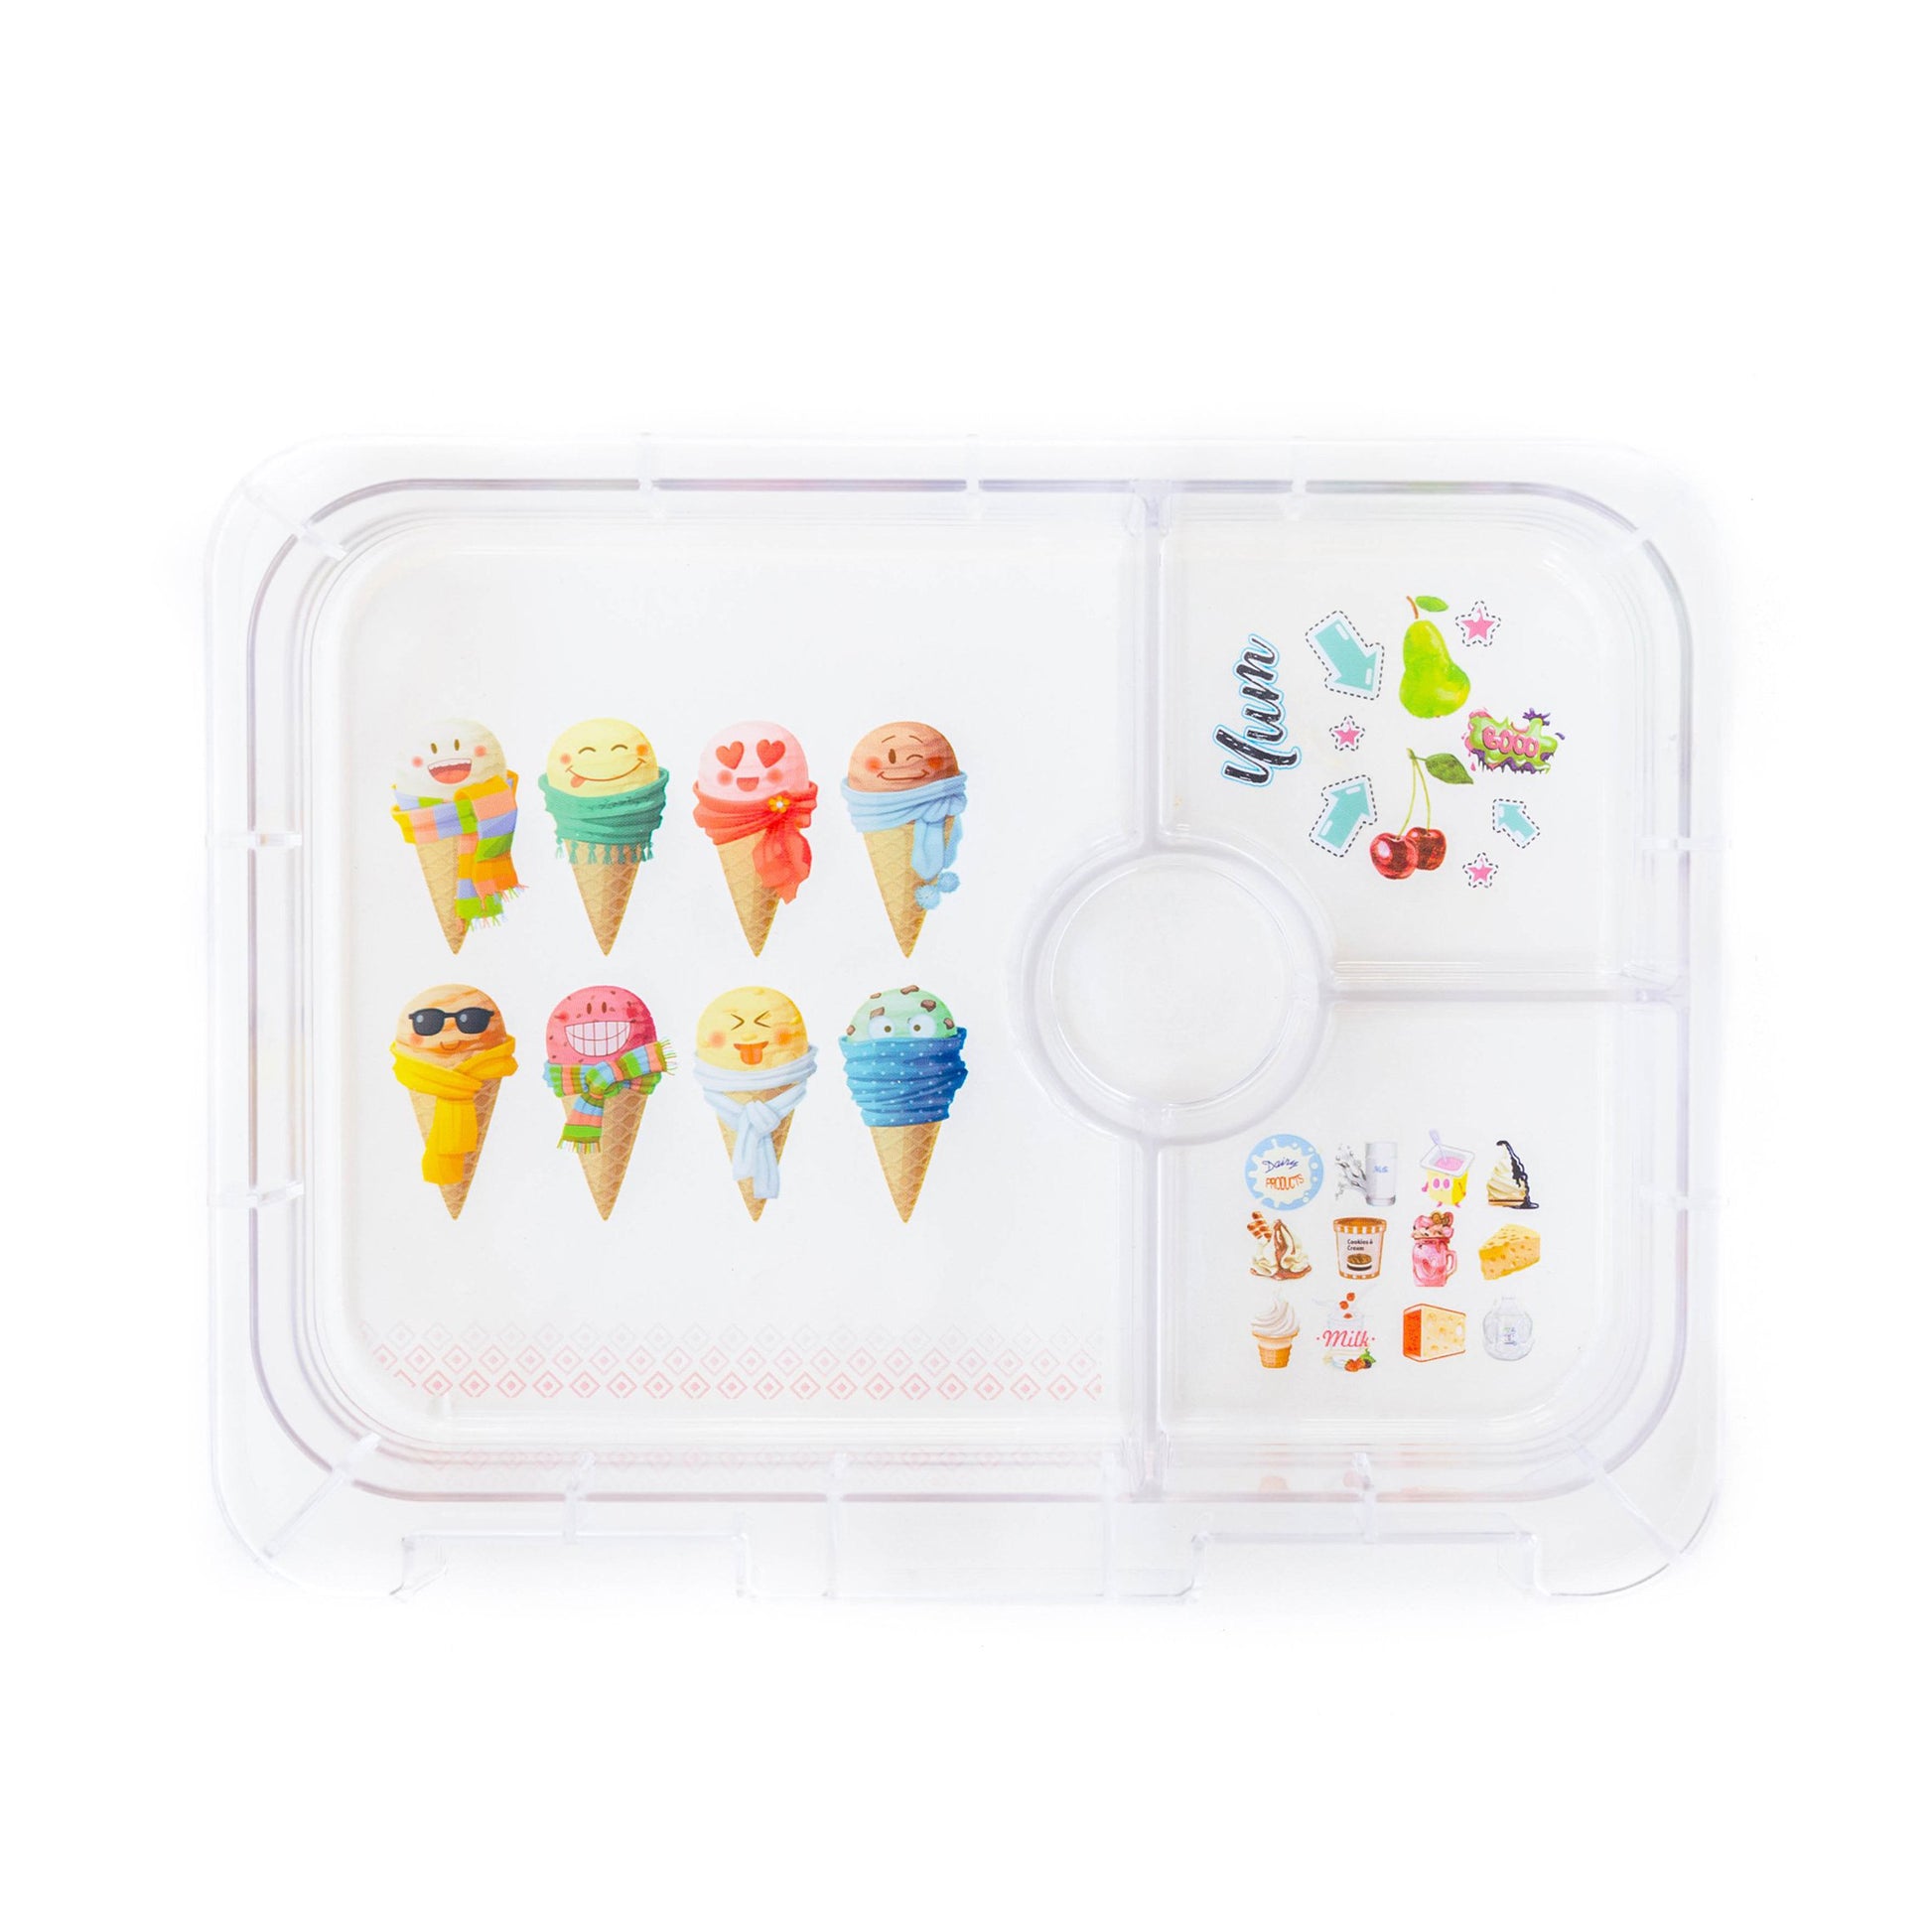 Citron Australia Kids Bento Lunchbox - 4 compartments With Accessories - Superhero